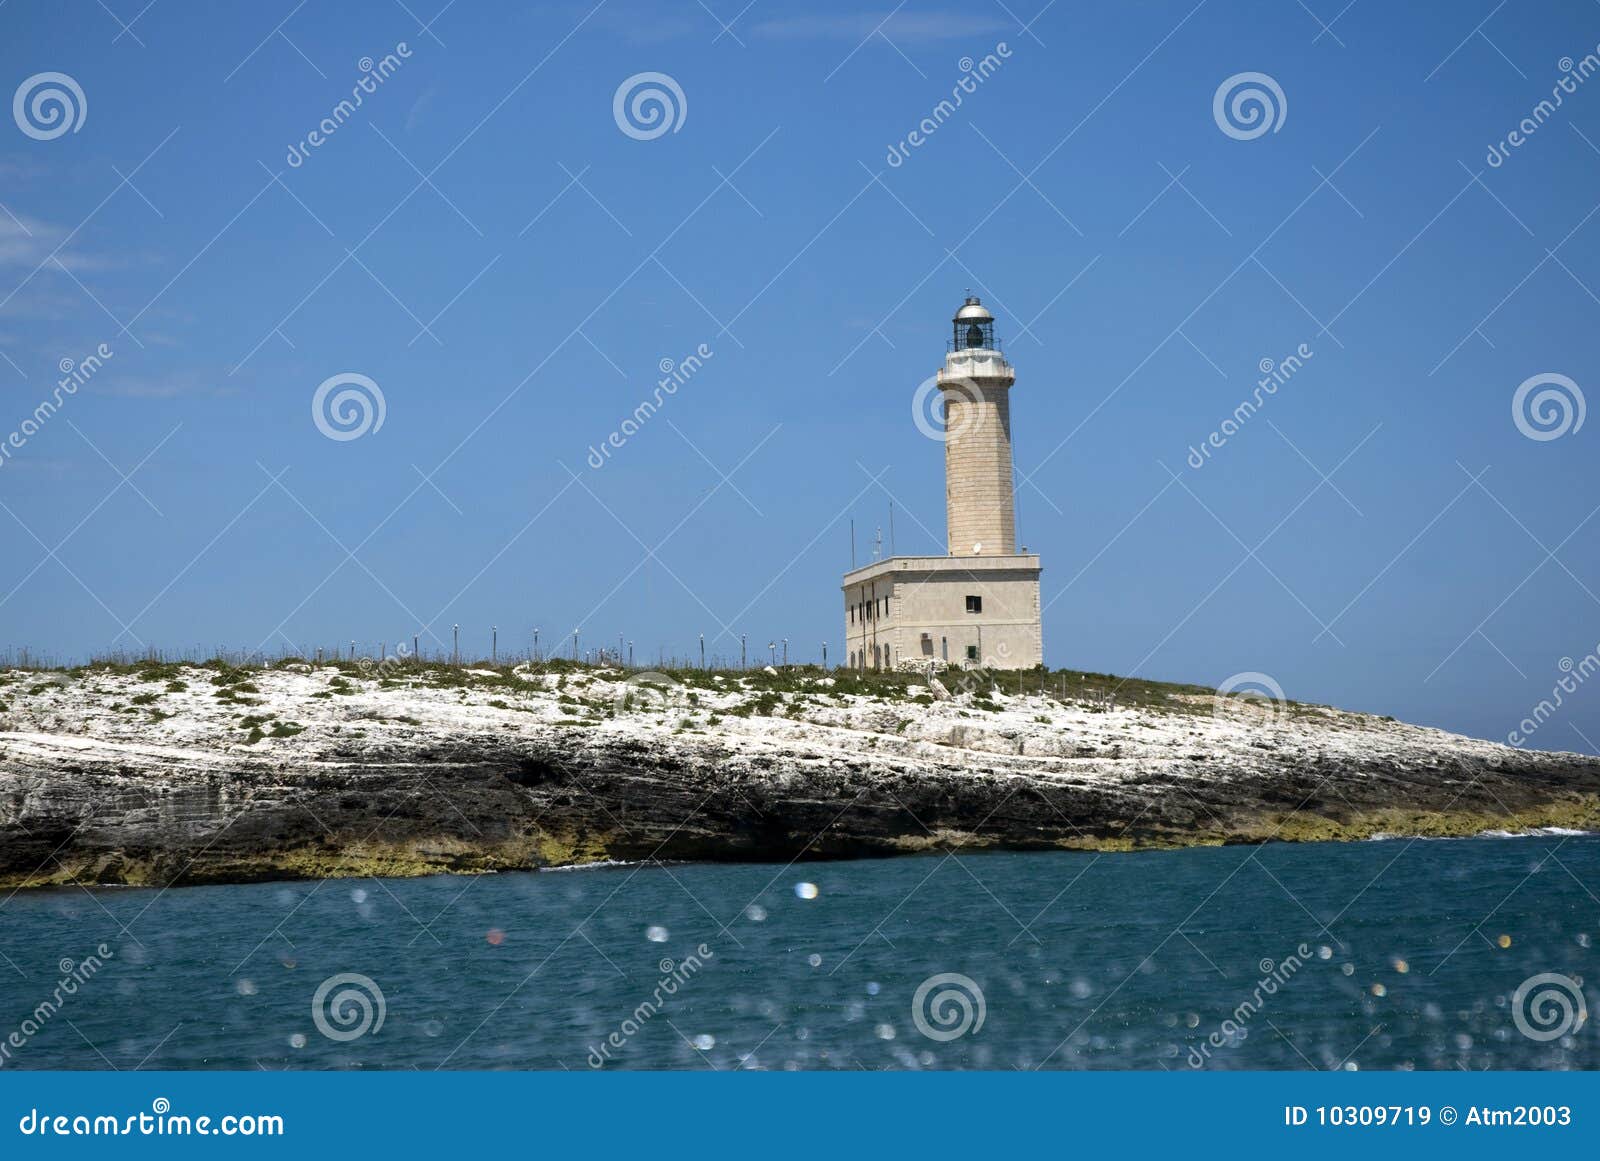 vieste - italy - the lighthouse